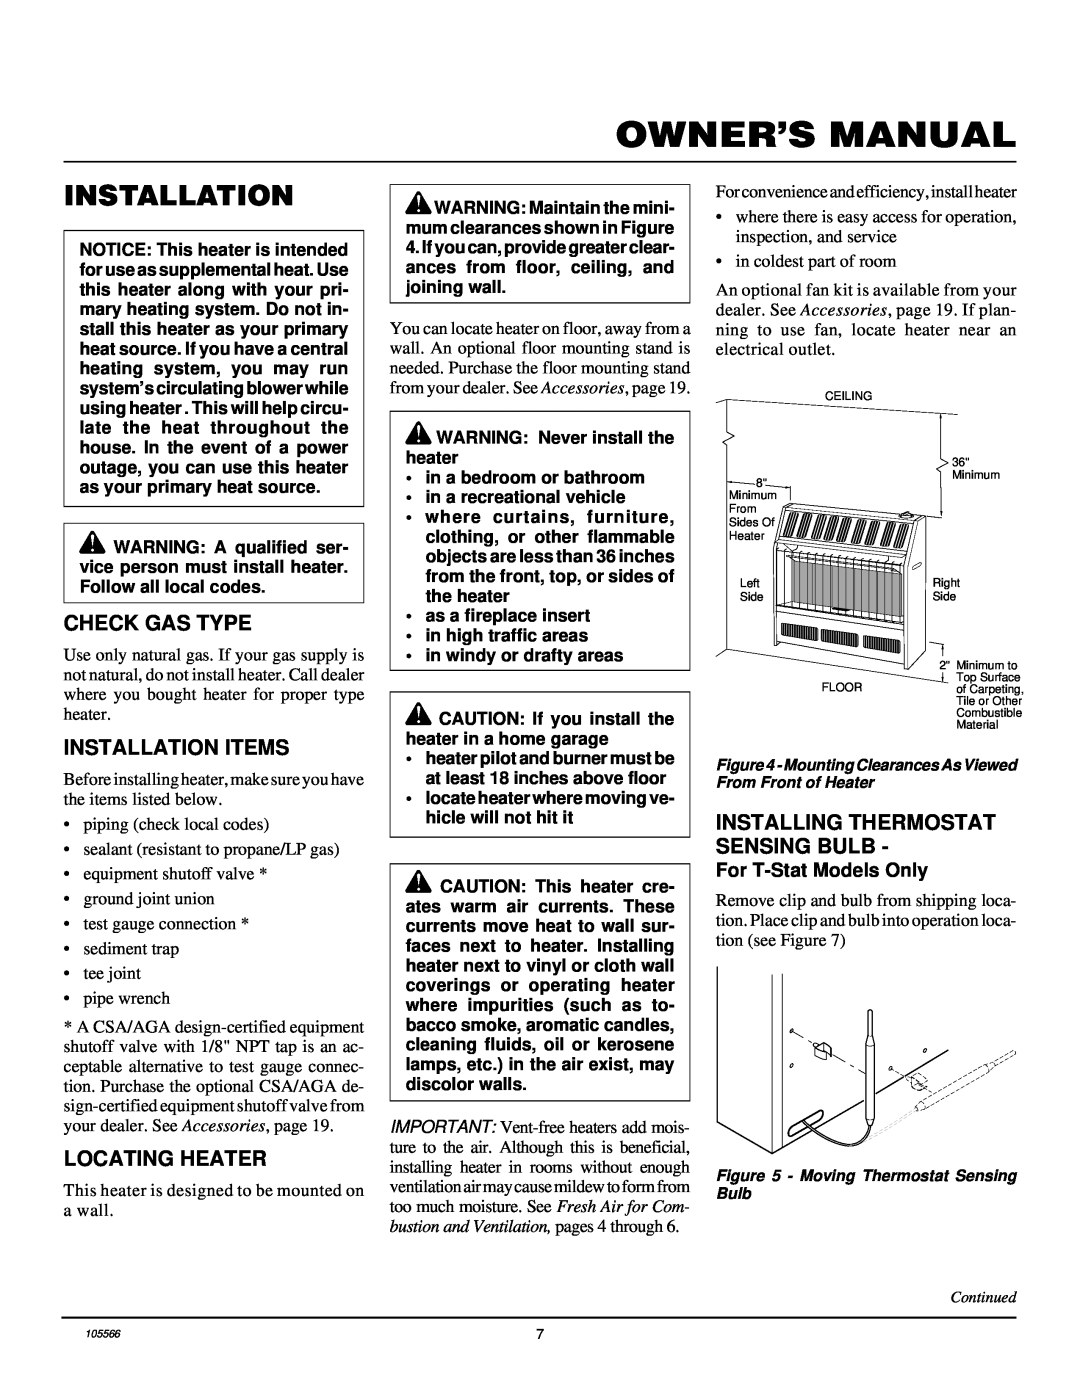 Desa FAS-5C, FA-5B, FA-3B Check Gas Type, Installation Items, Locating Heater, Installing Thermostat Sensing Bulb 